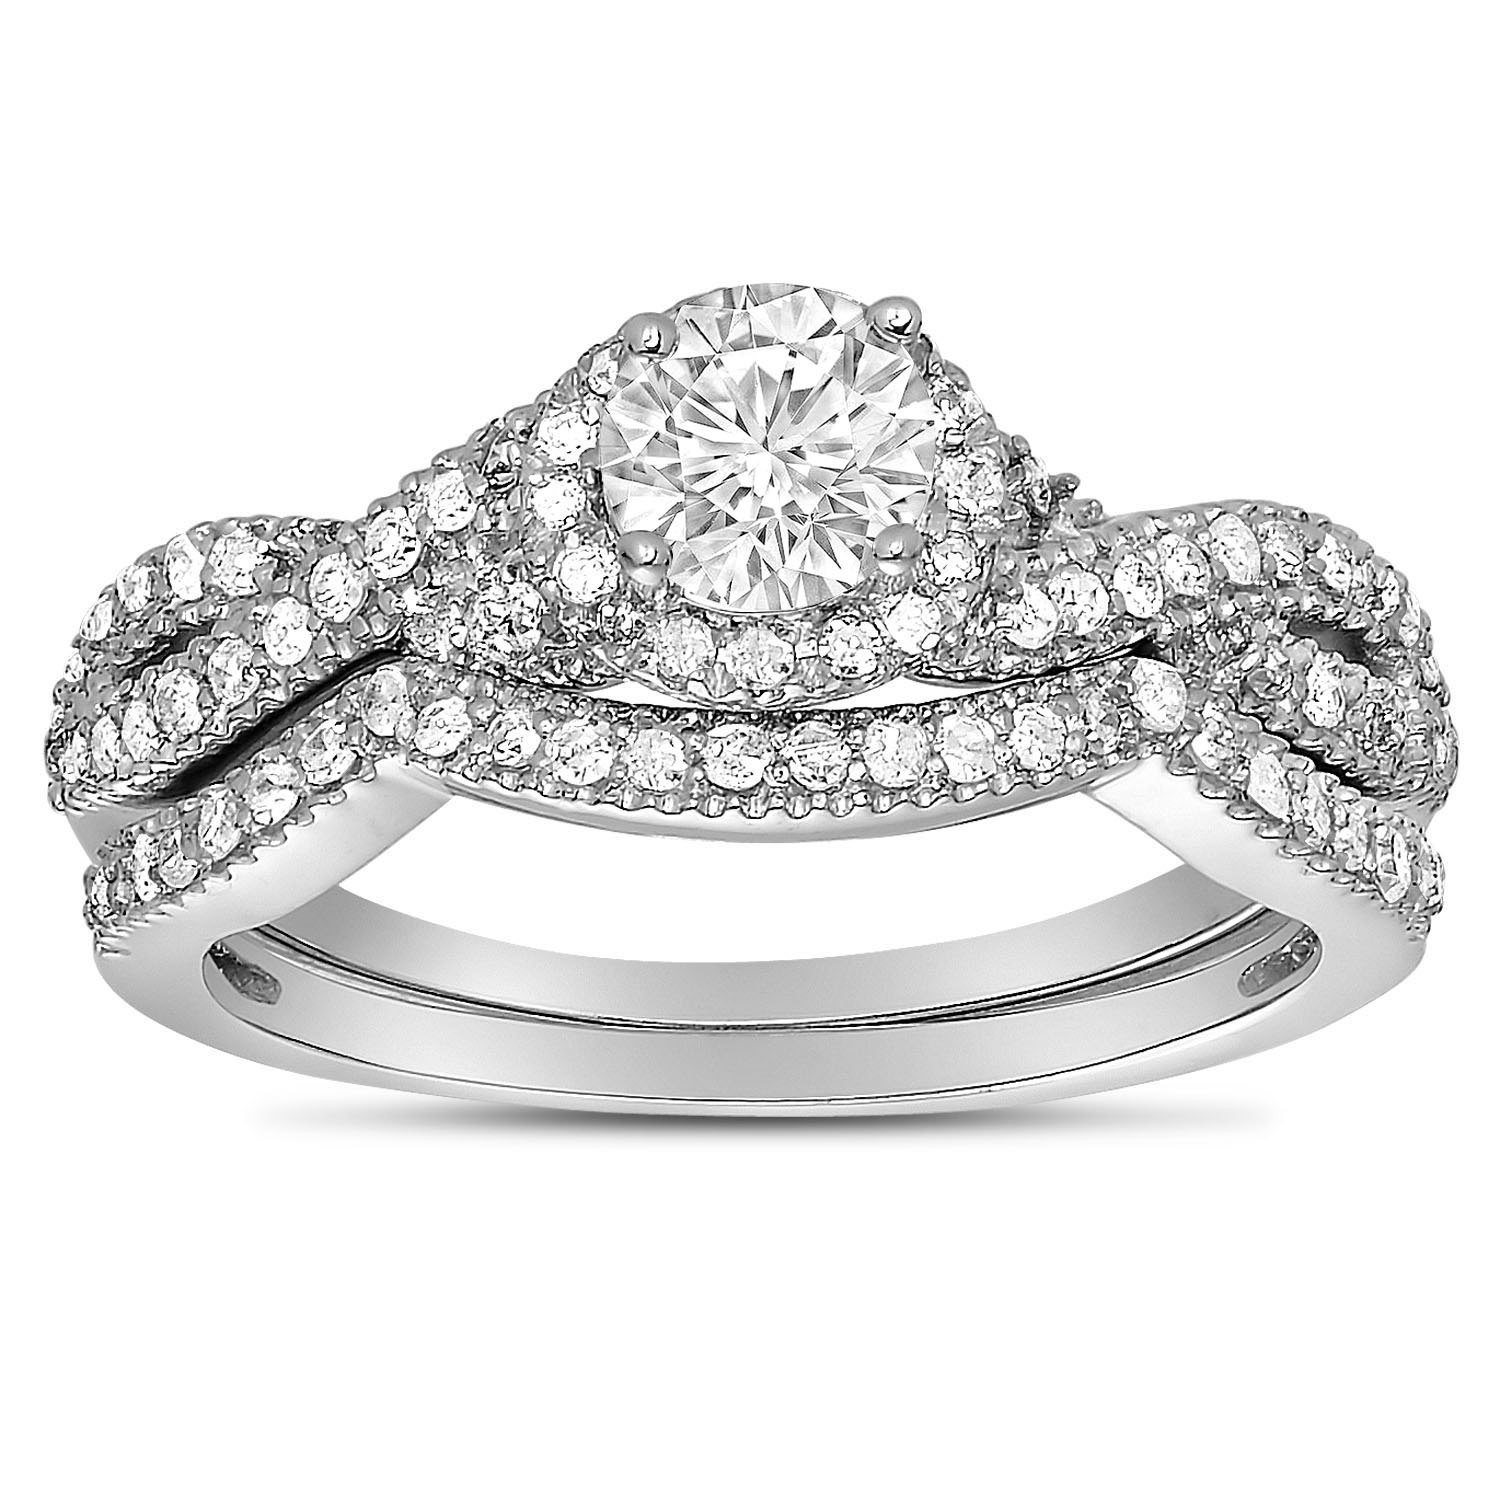 Diamond Wedding Ring Sets For Her
 2 Carat Round Diamond Infinity Wedding Ring Set in White